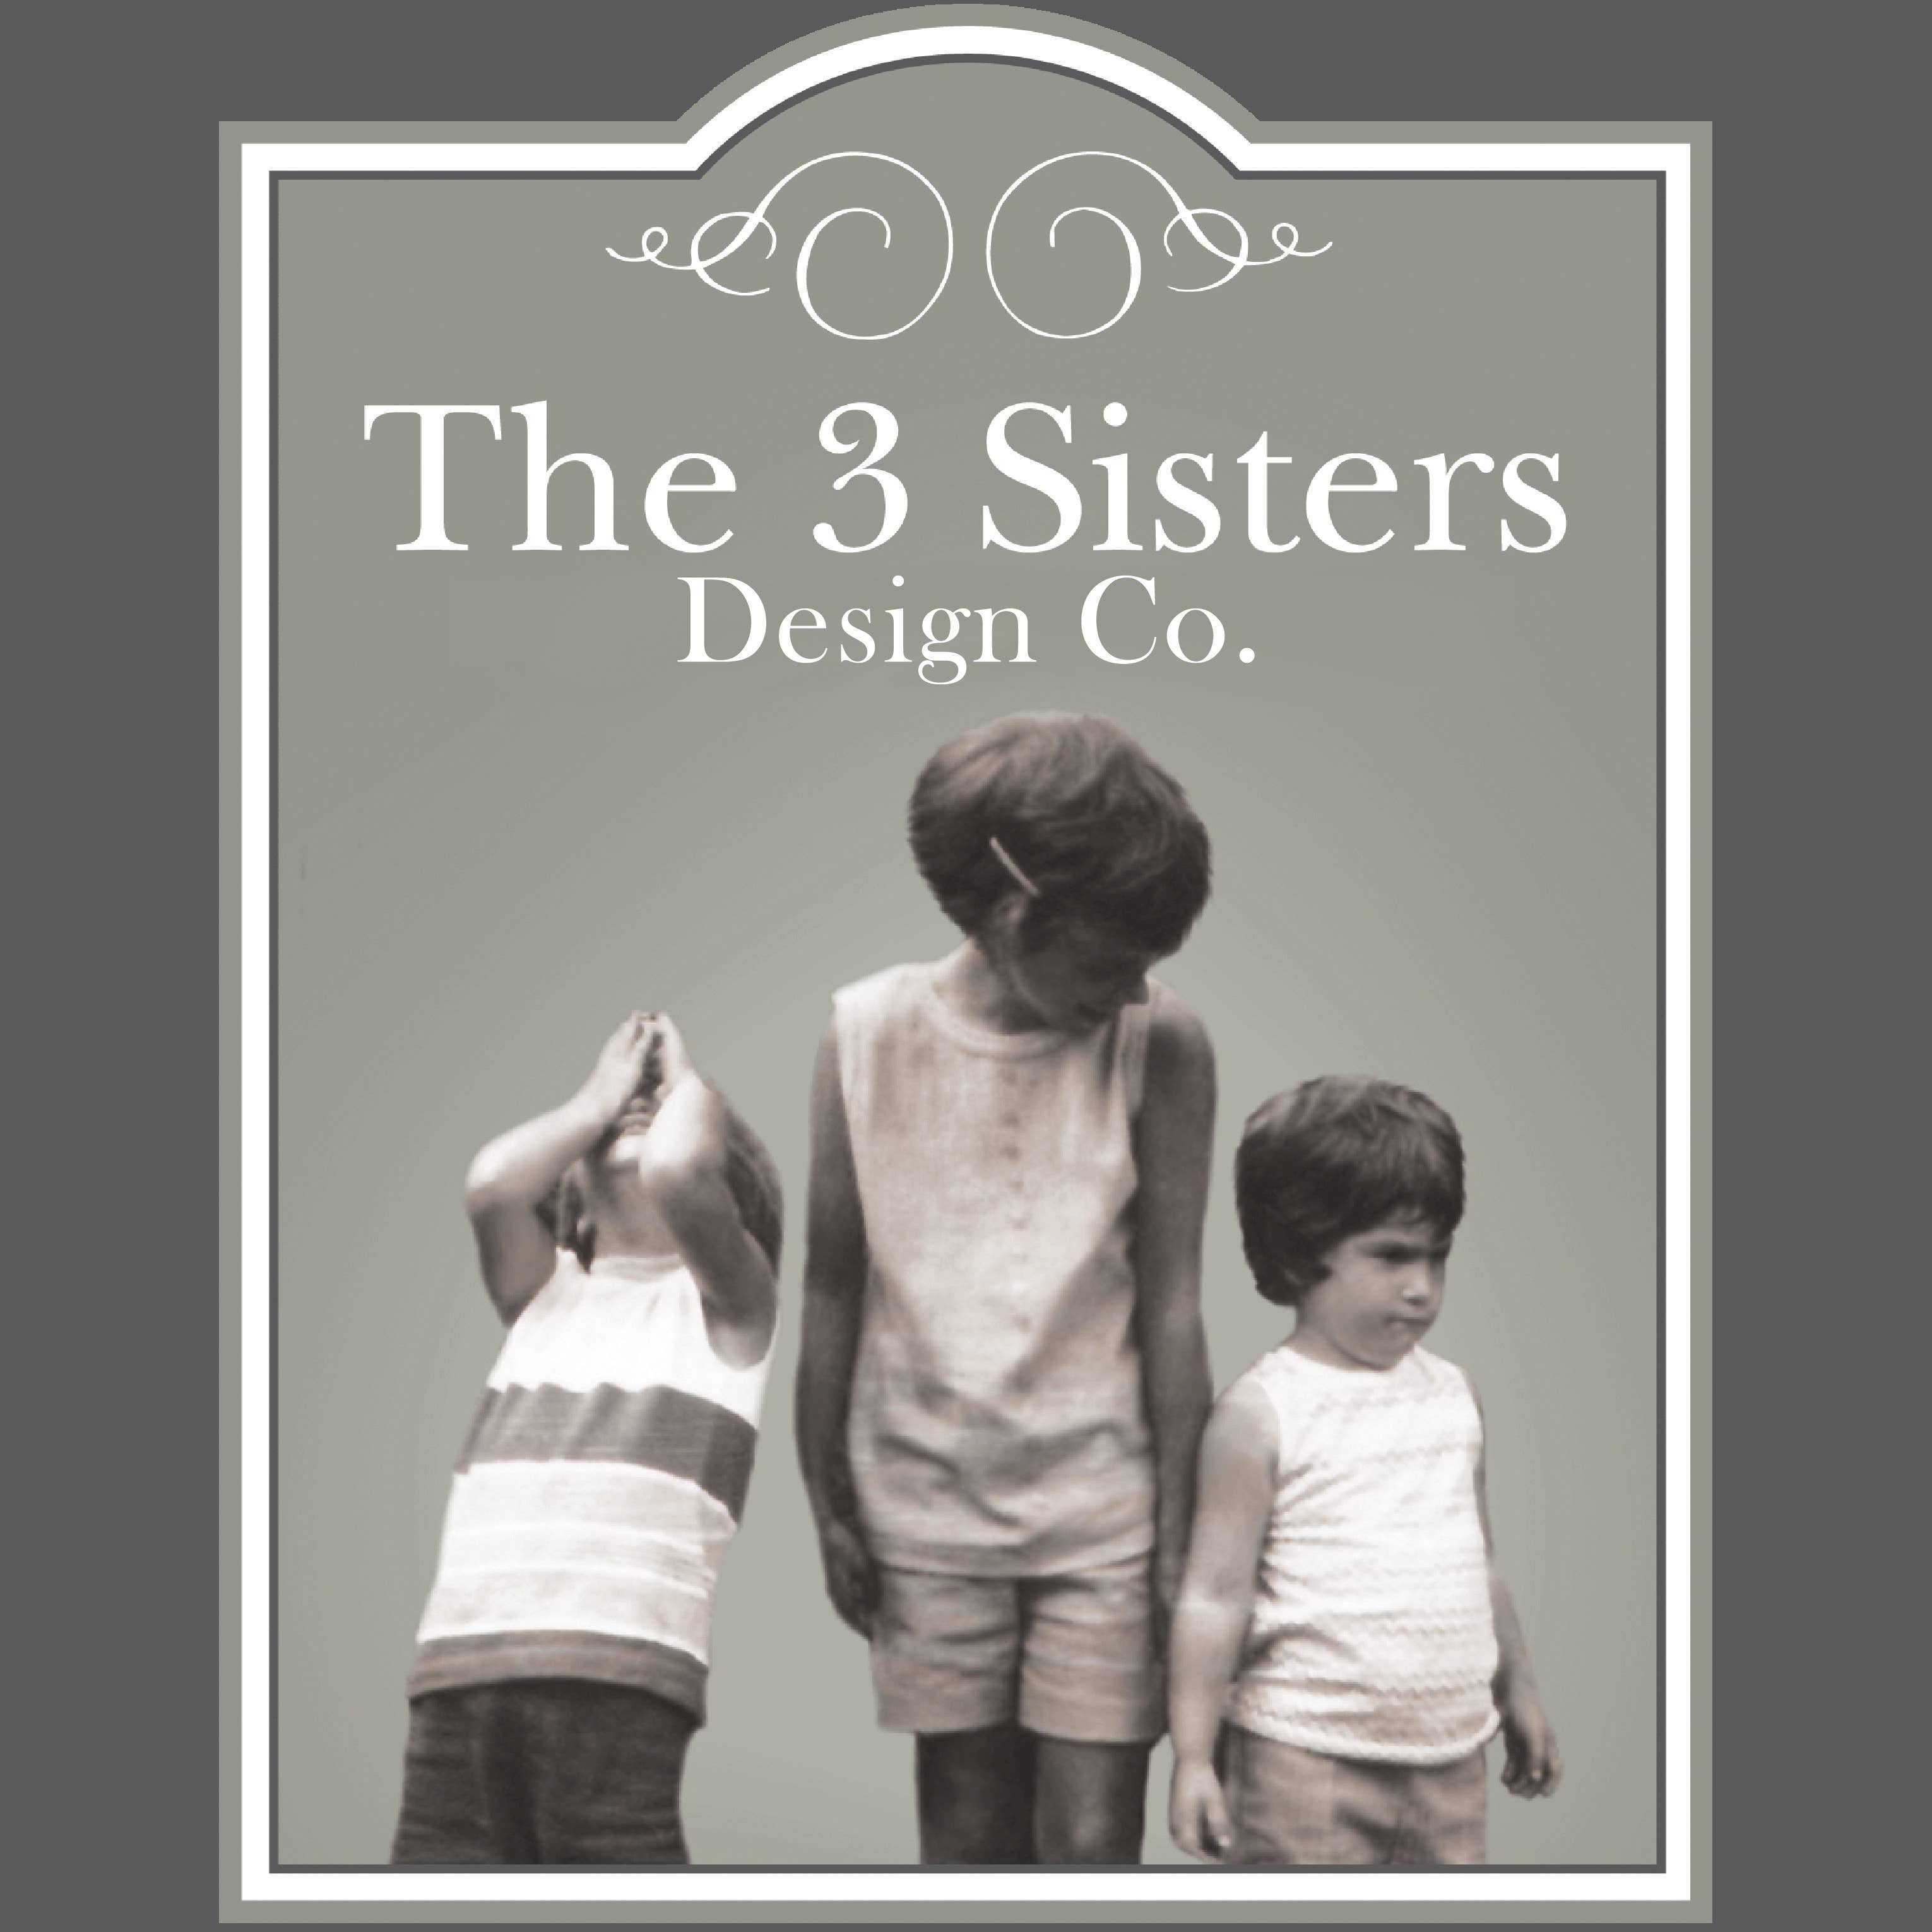 Two Girls Logo Design Sisters Children's Boutique Kids -  Portugal